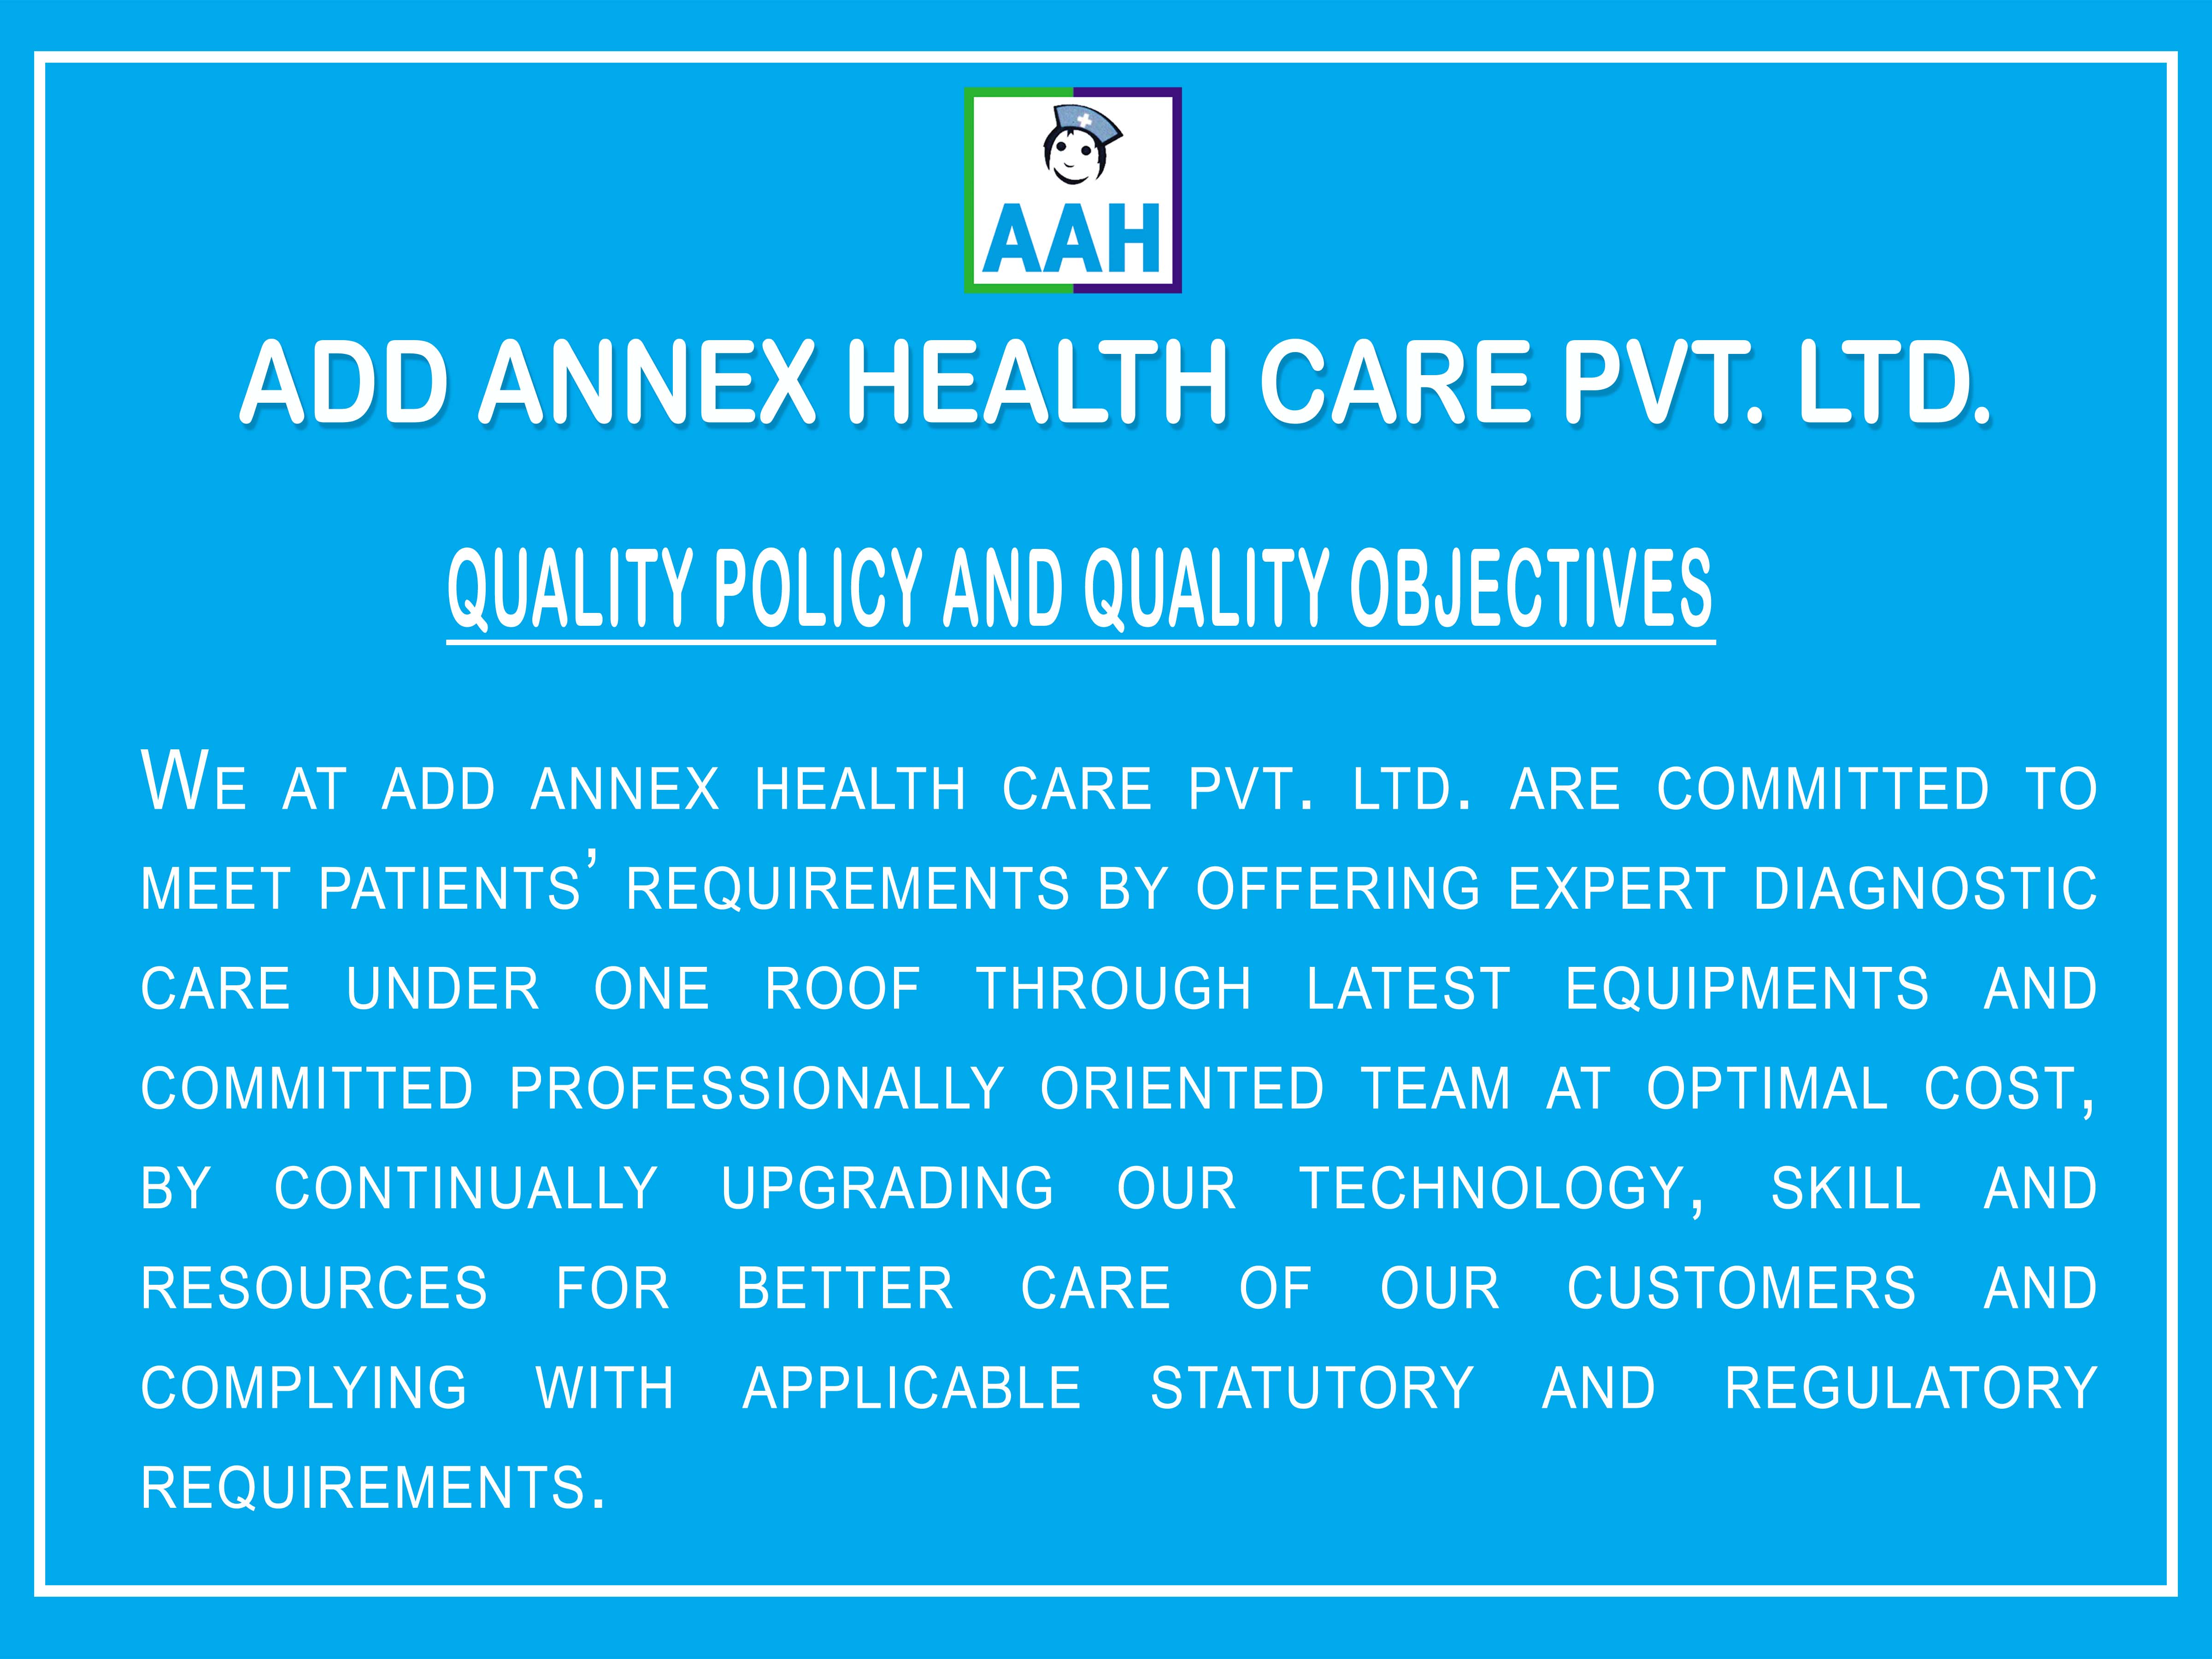 About - Add Annex Healthcare